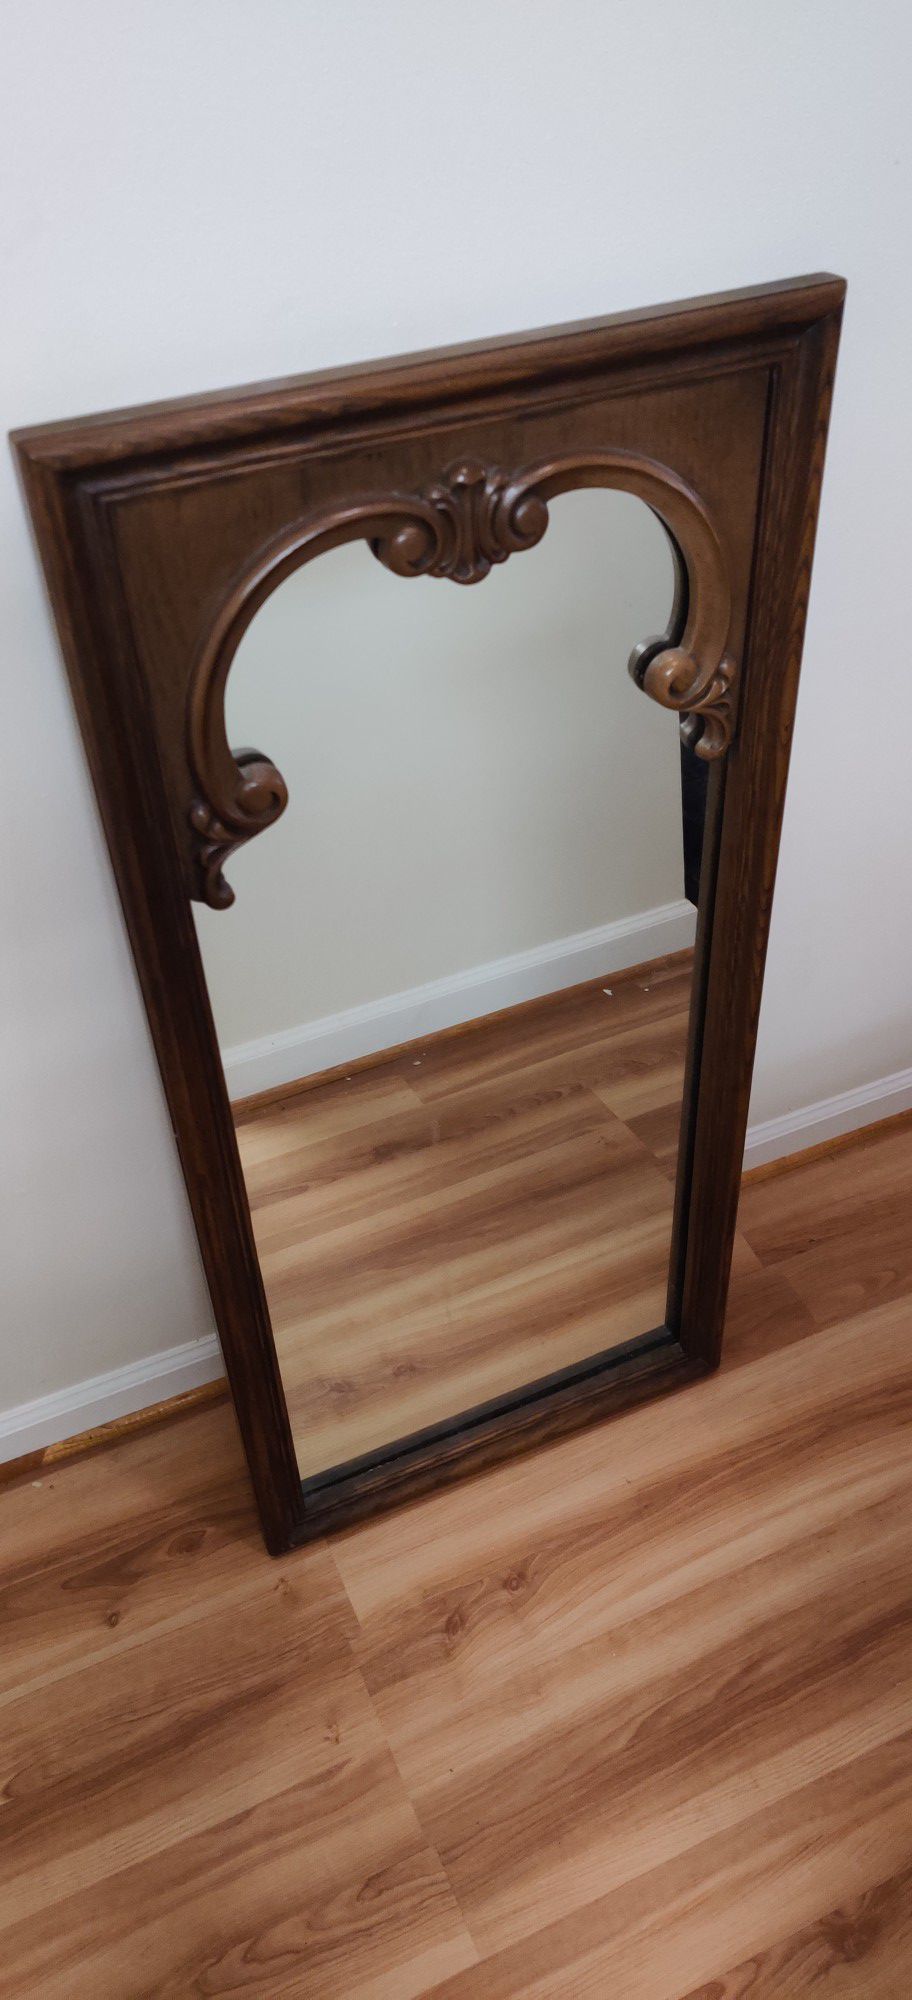 Mirror 20 x 45 - Solid wood